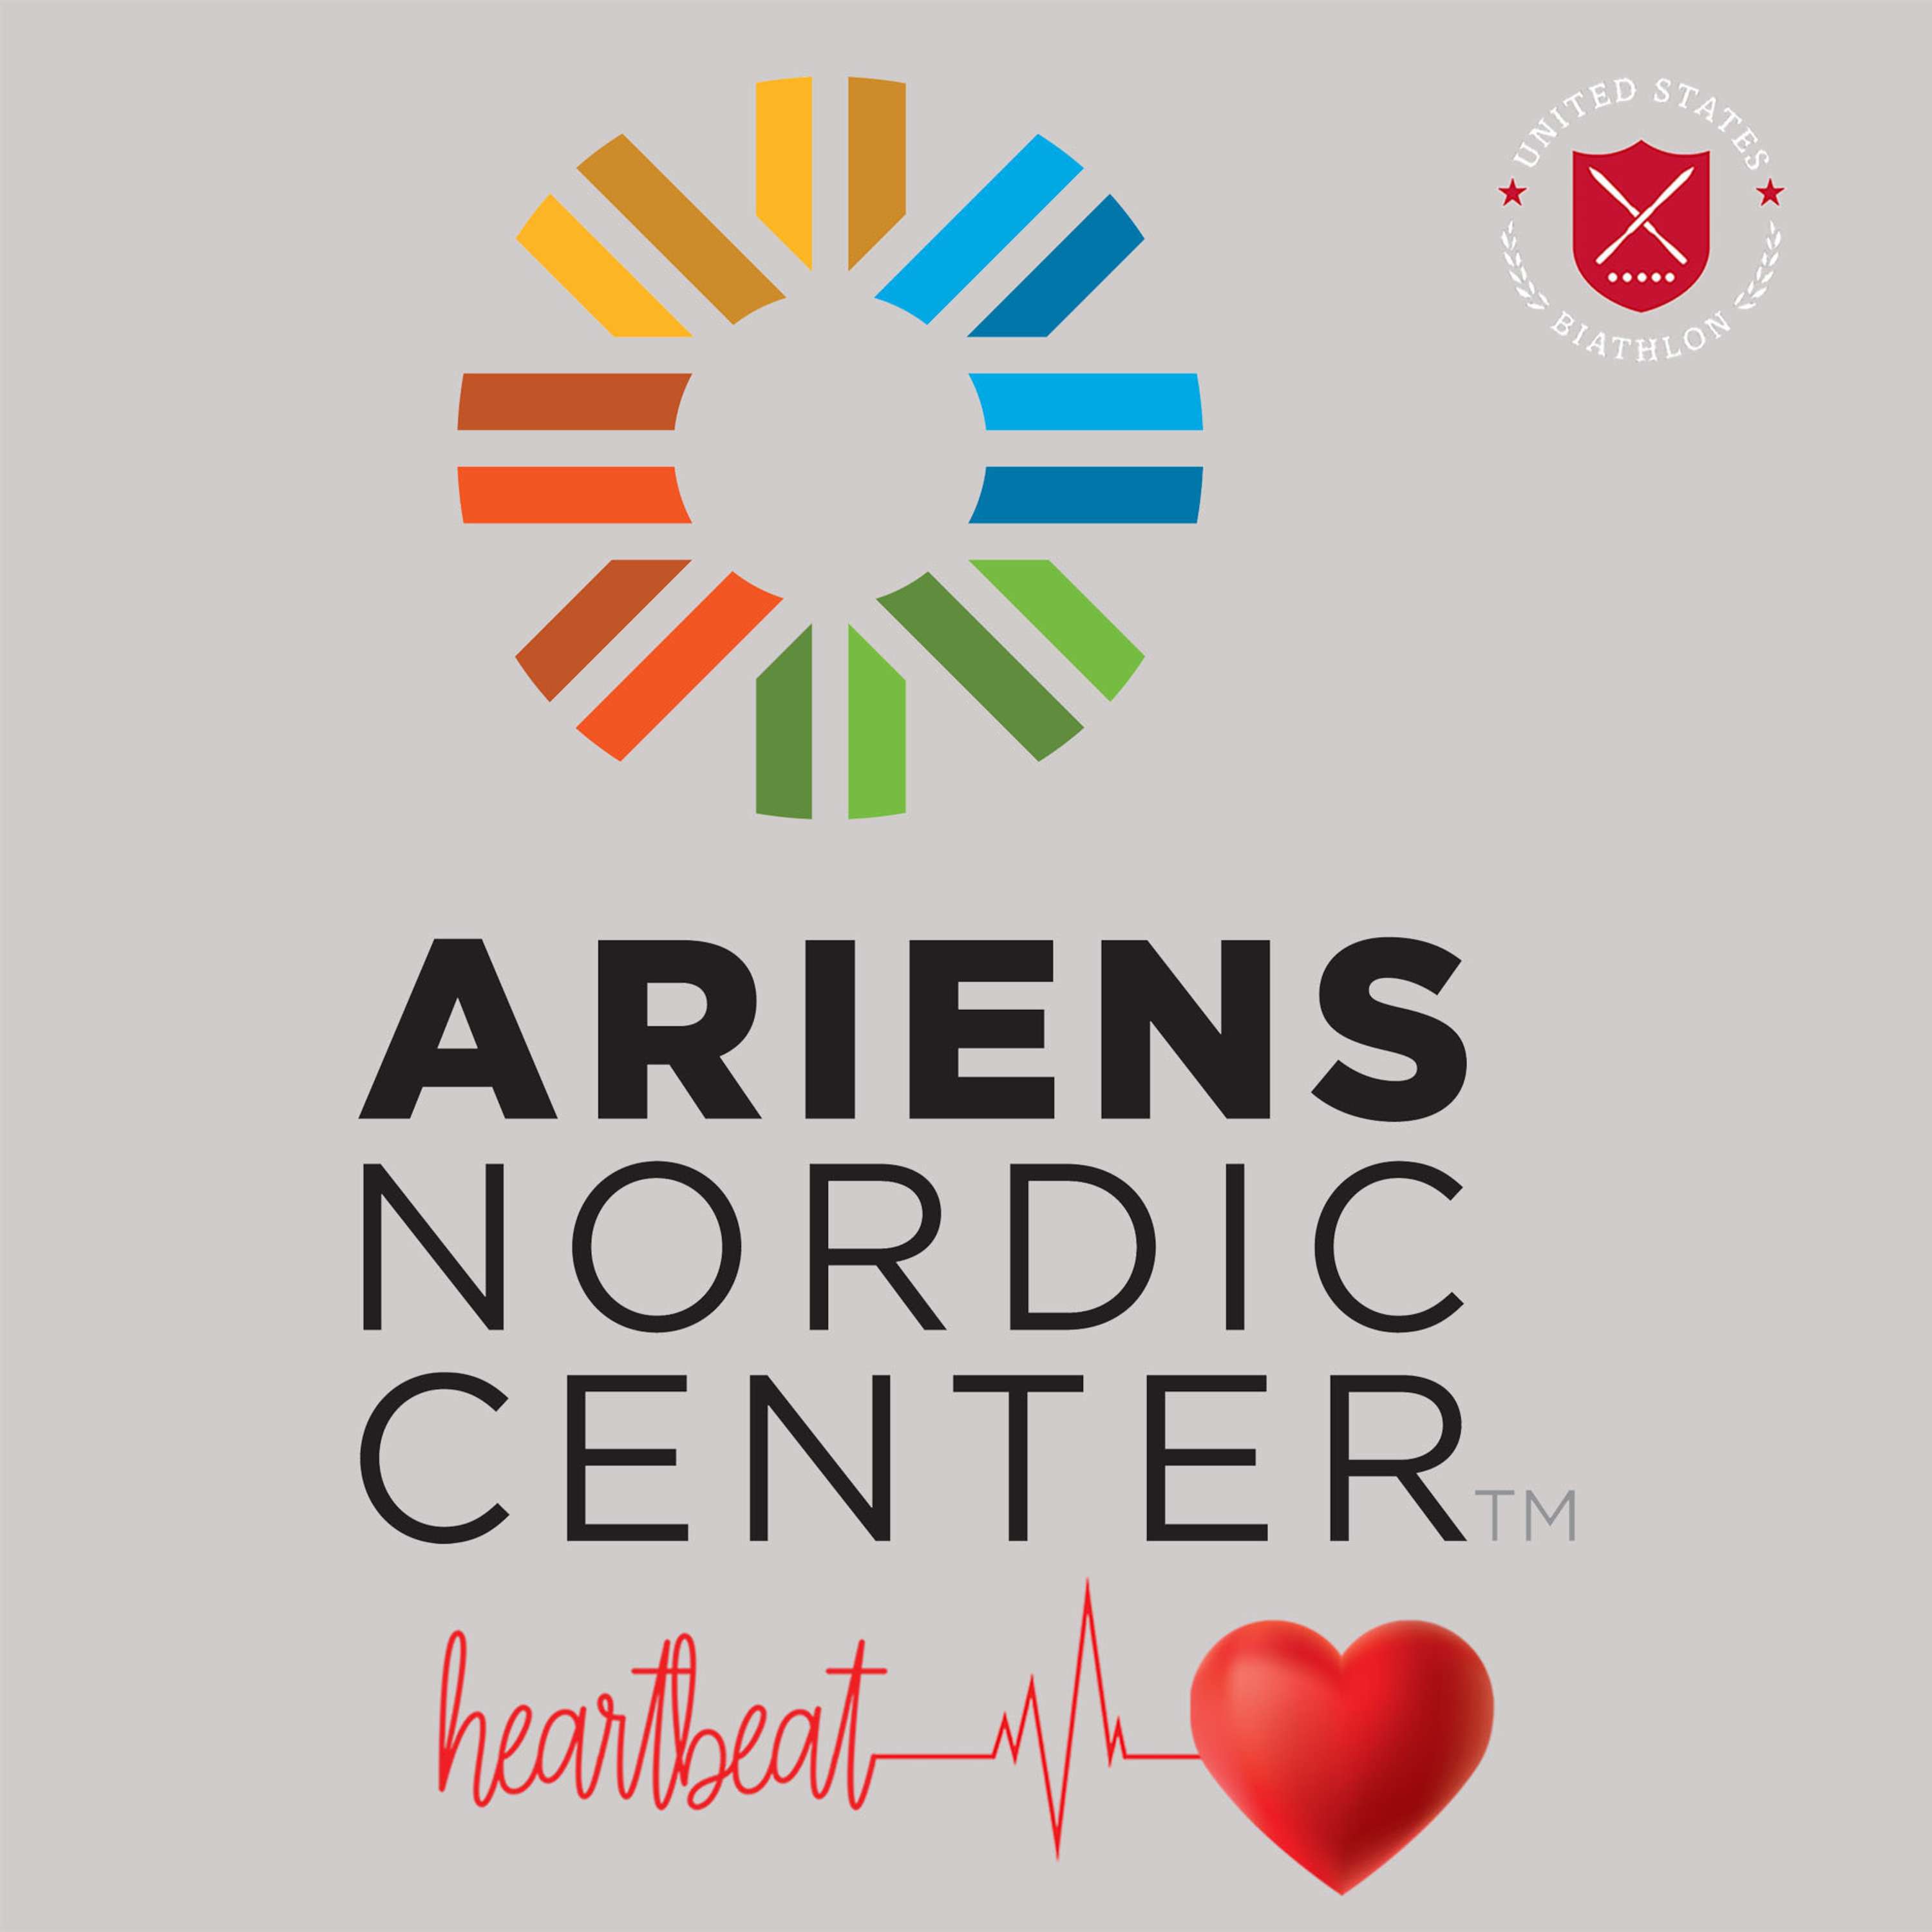 New Ariens Nordic Center